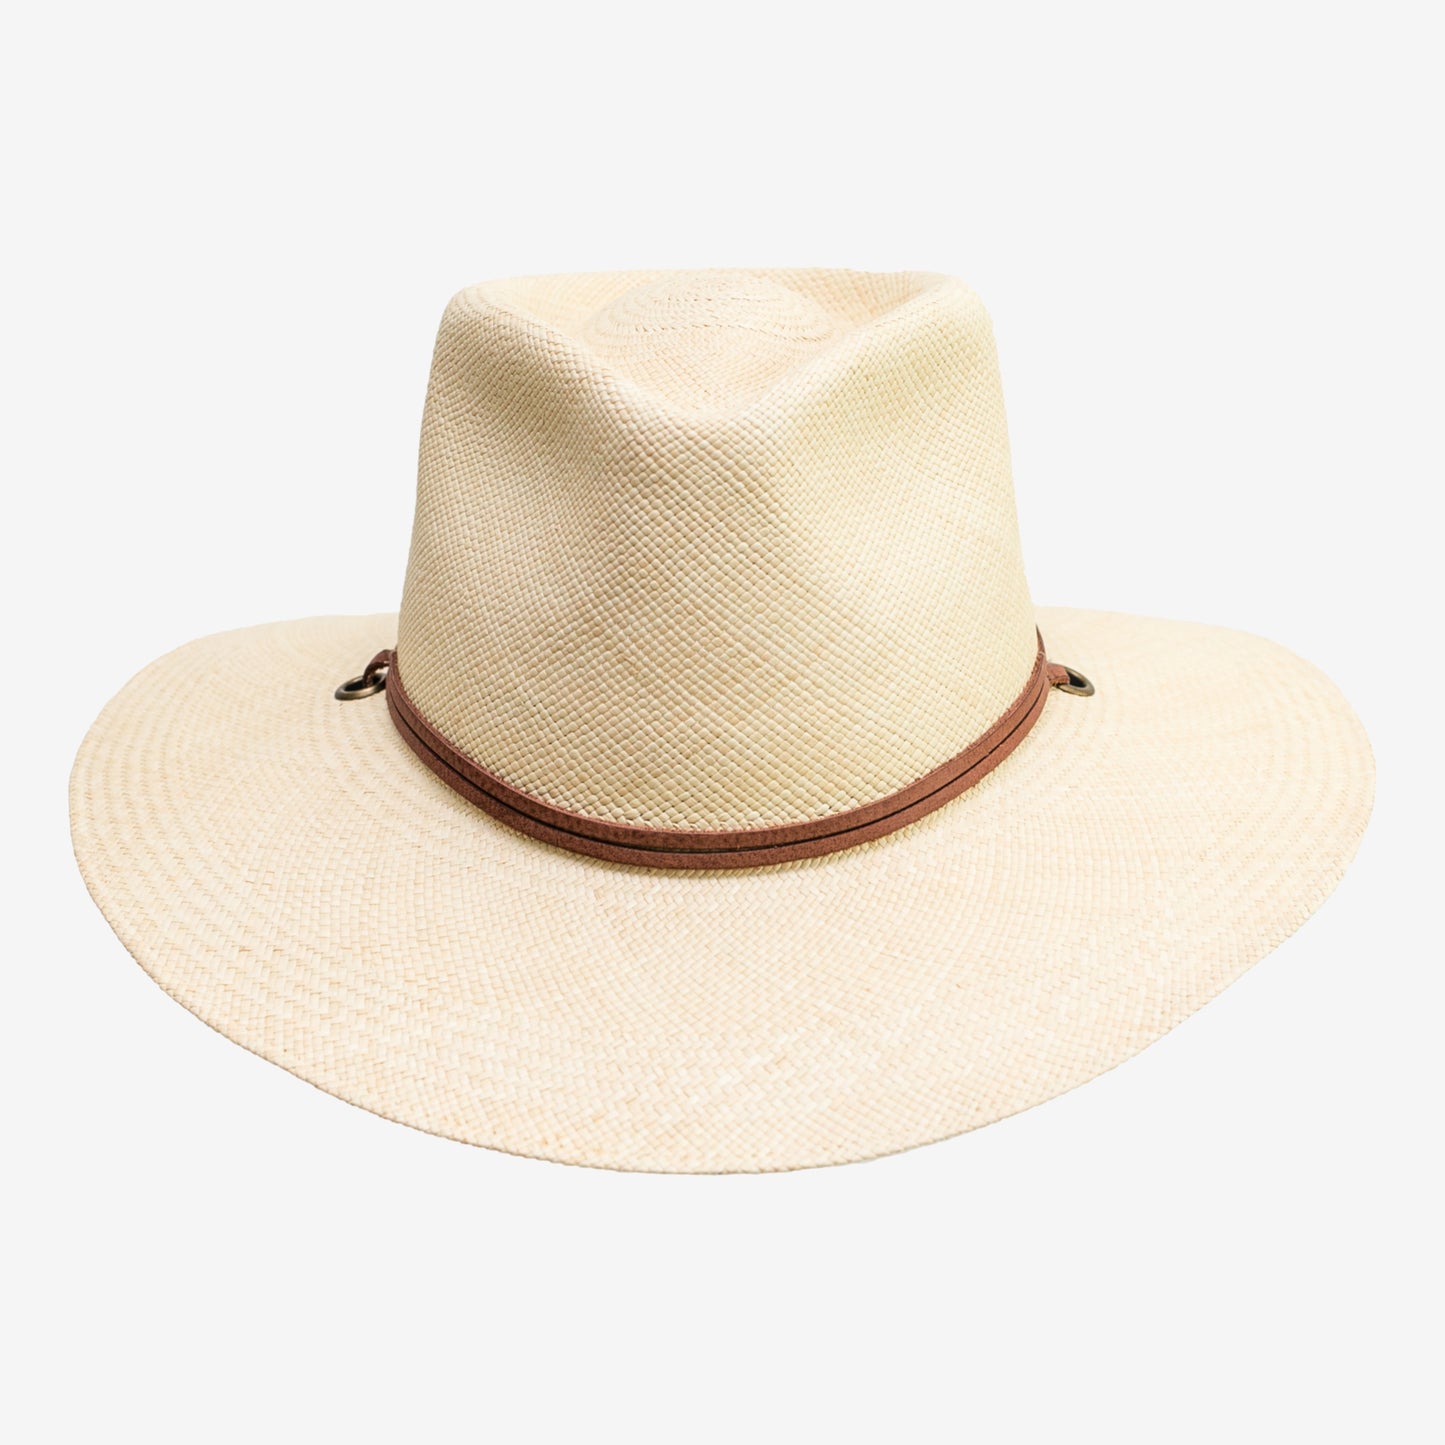 mindo-hats-the-david-wide-brim-straw-panama-hat-natural-front